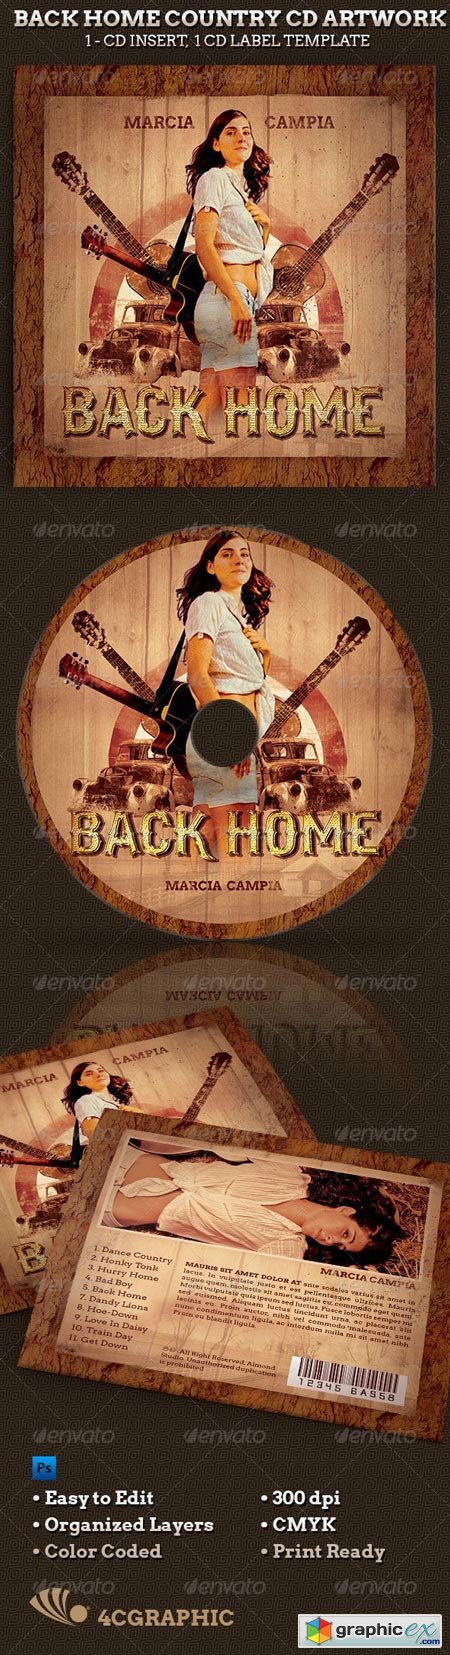 Back Home Country Music CD Artwork 6916154